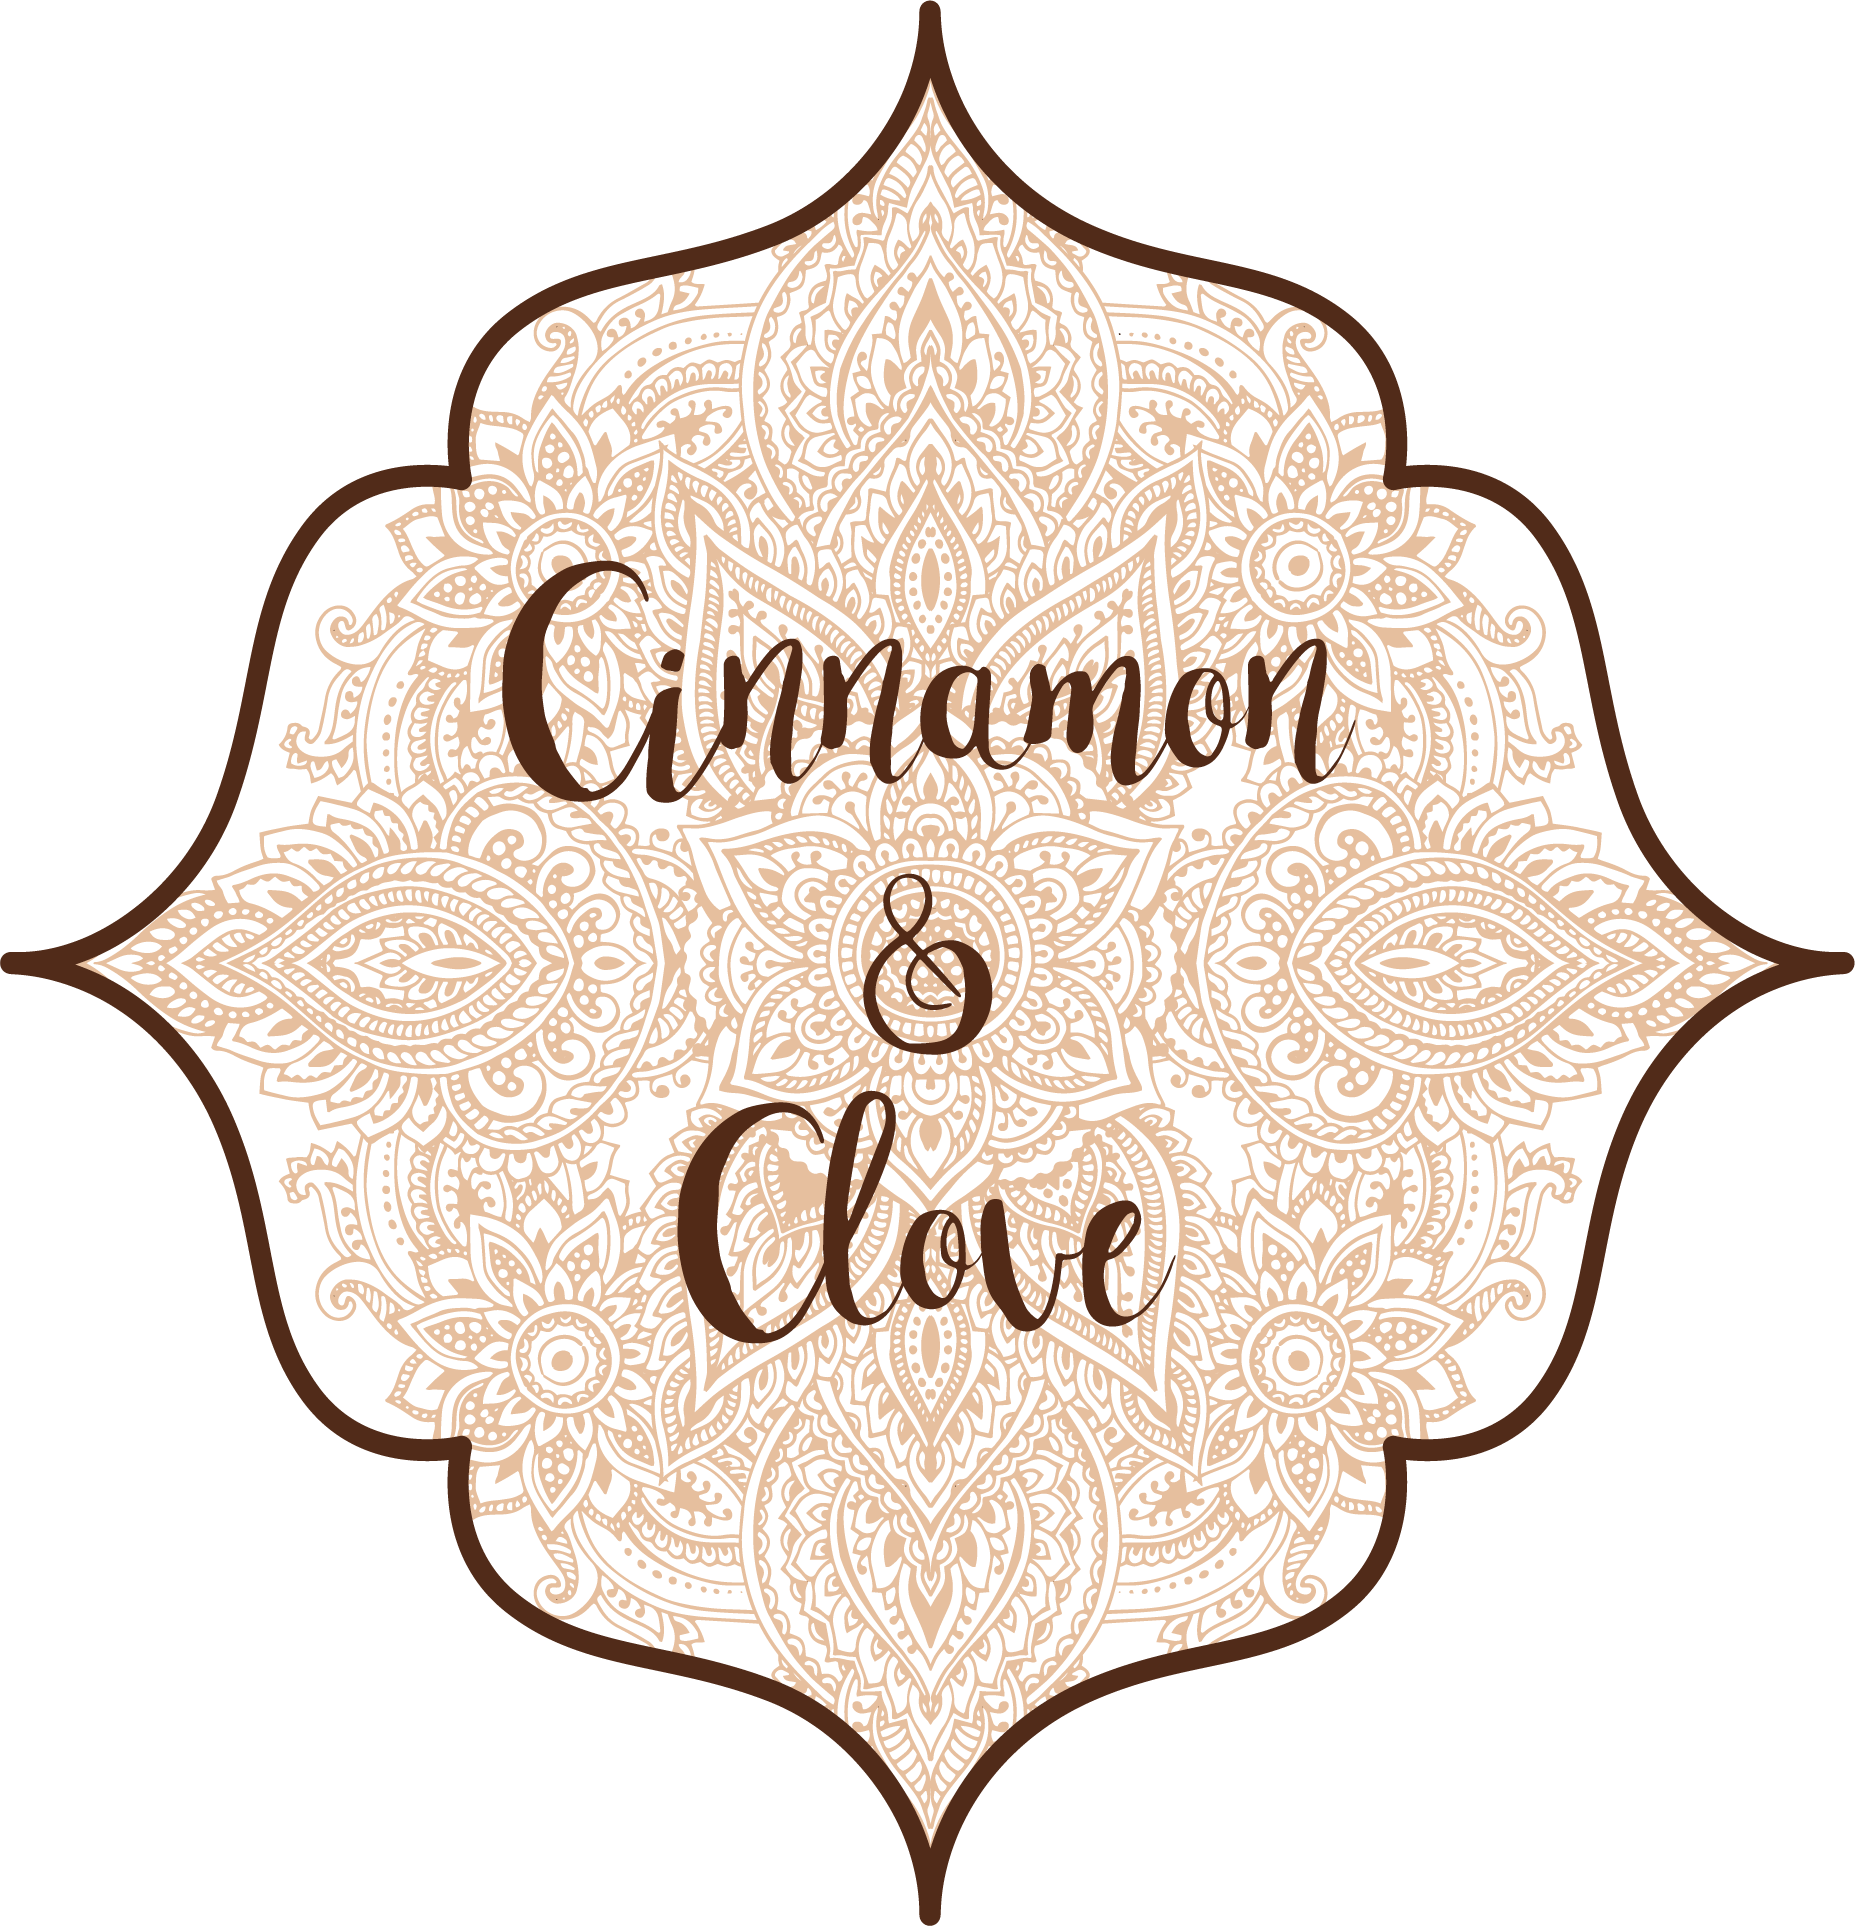 Cinnamon & Clove